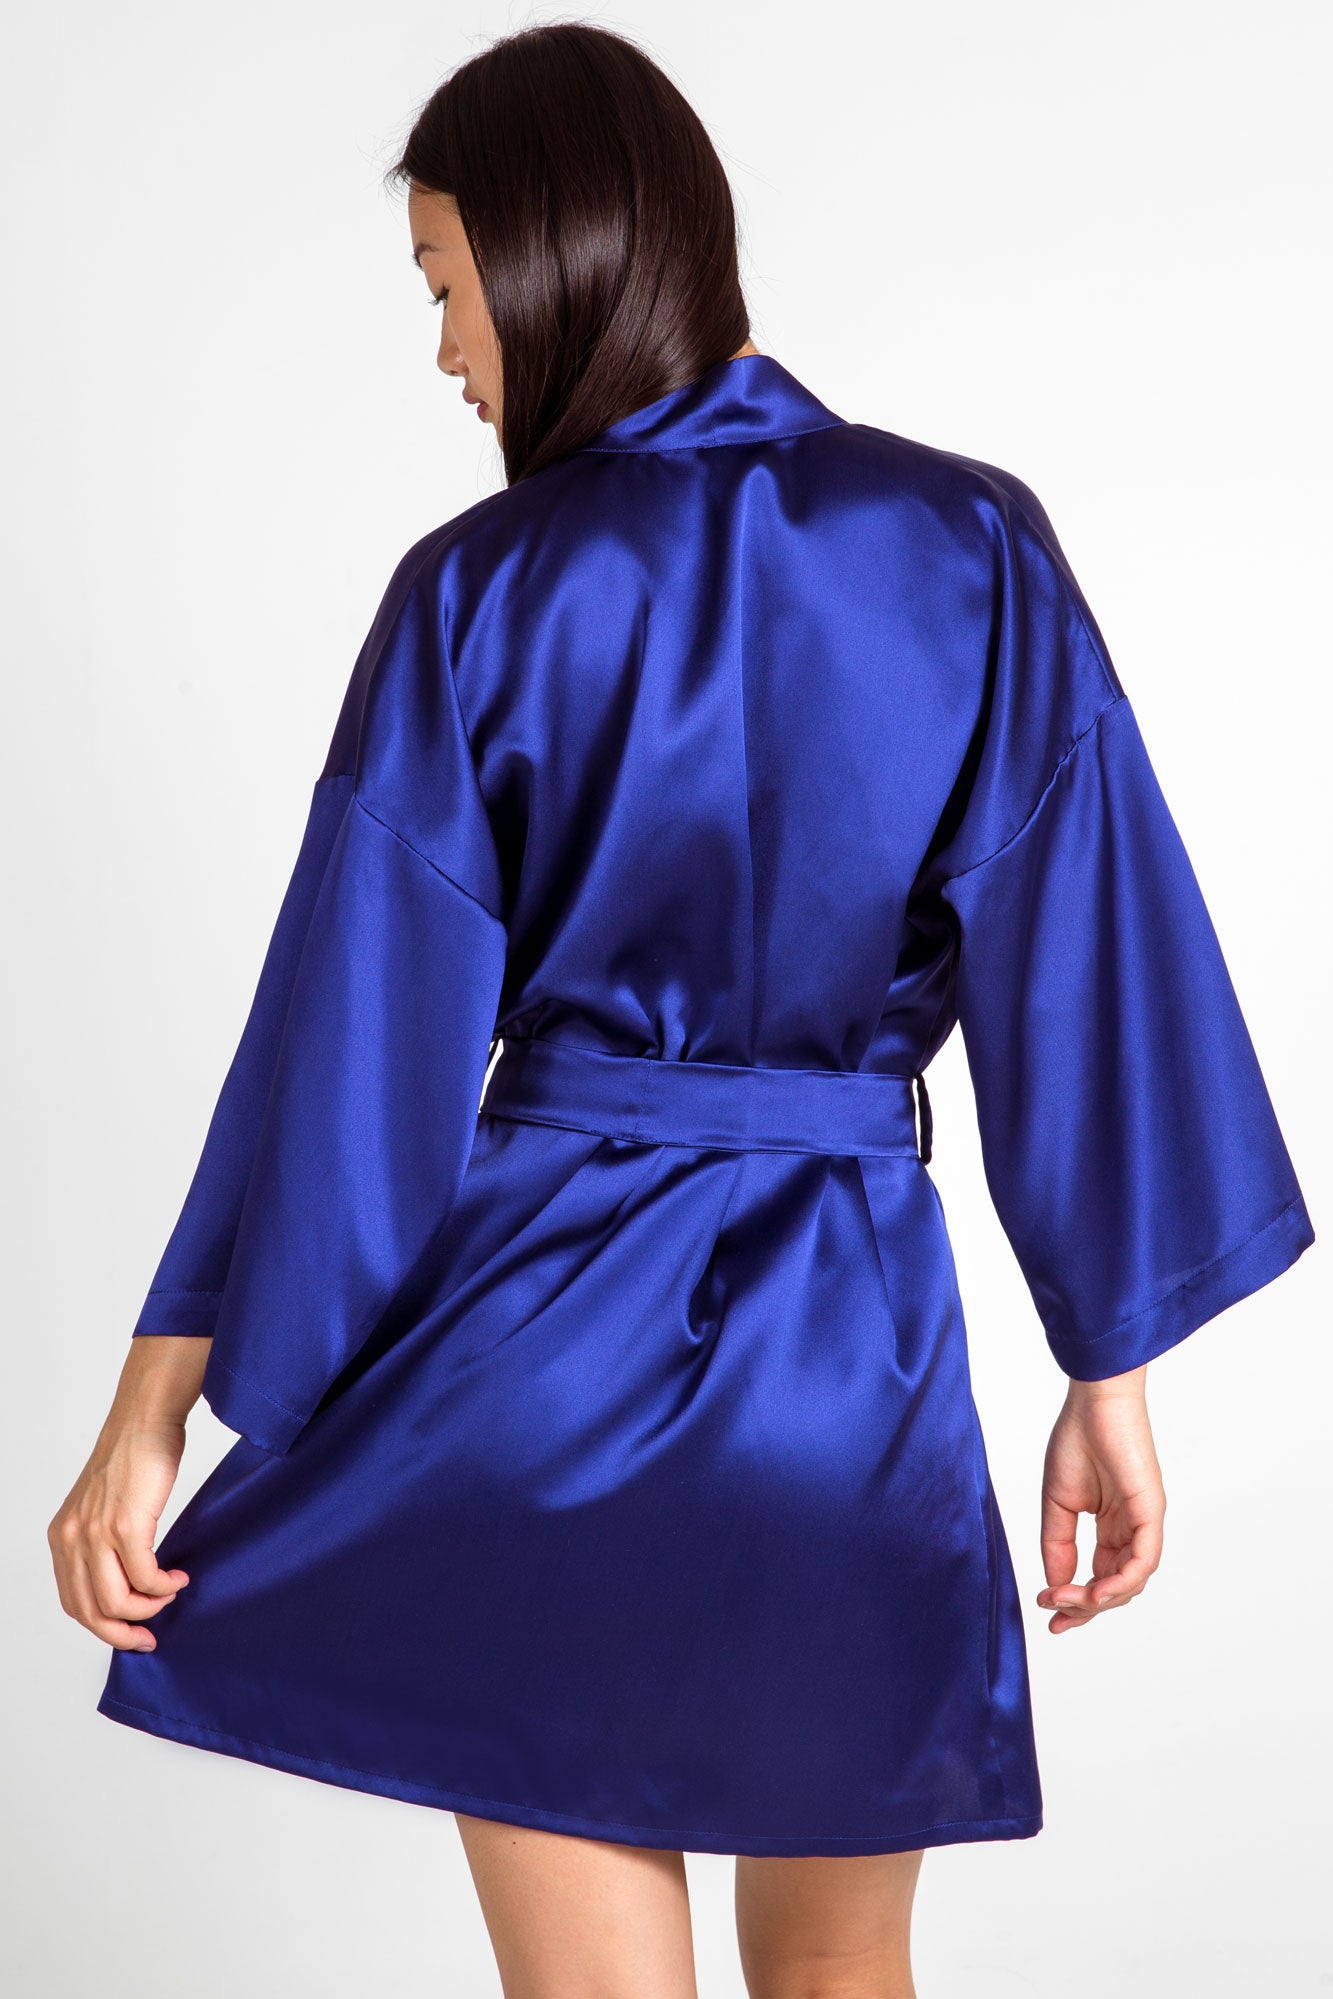 Designer silk robes and dressing gowns in deep indigo blue